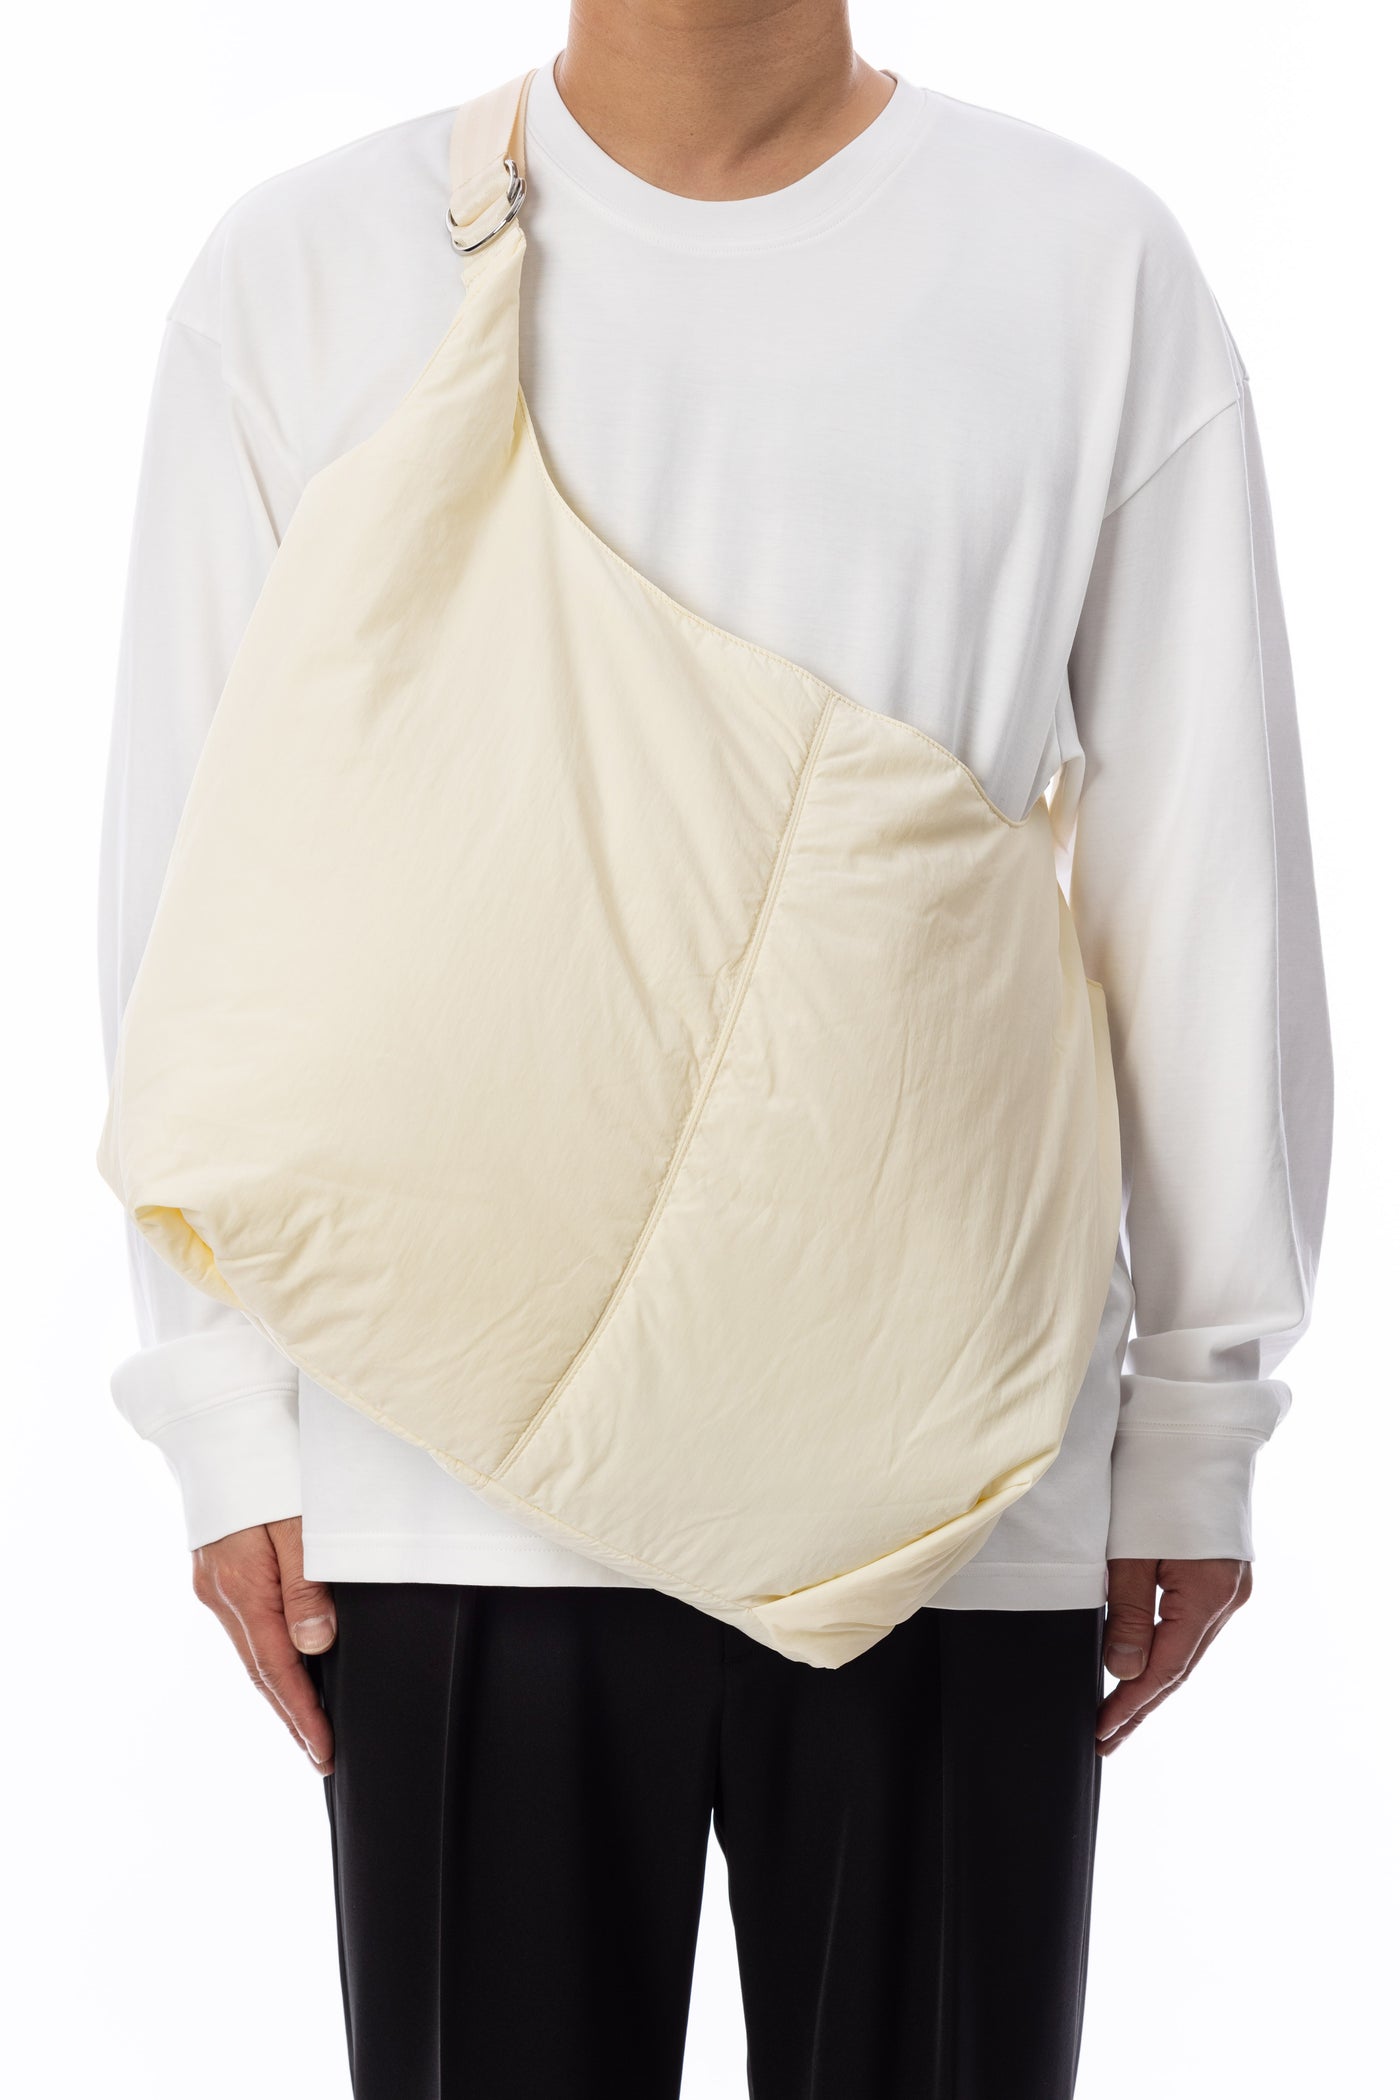 Limited Product AA41-108 Padding Nylon Weather Shoulder Shopping Bag